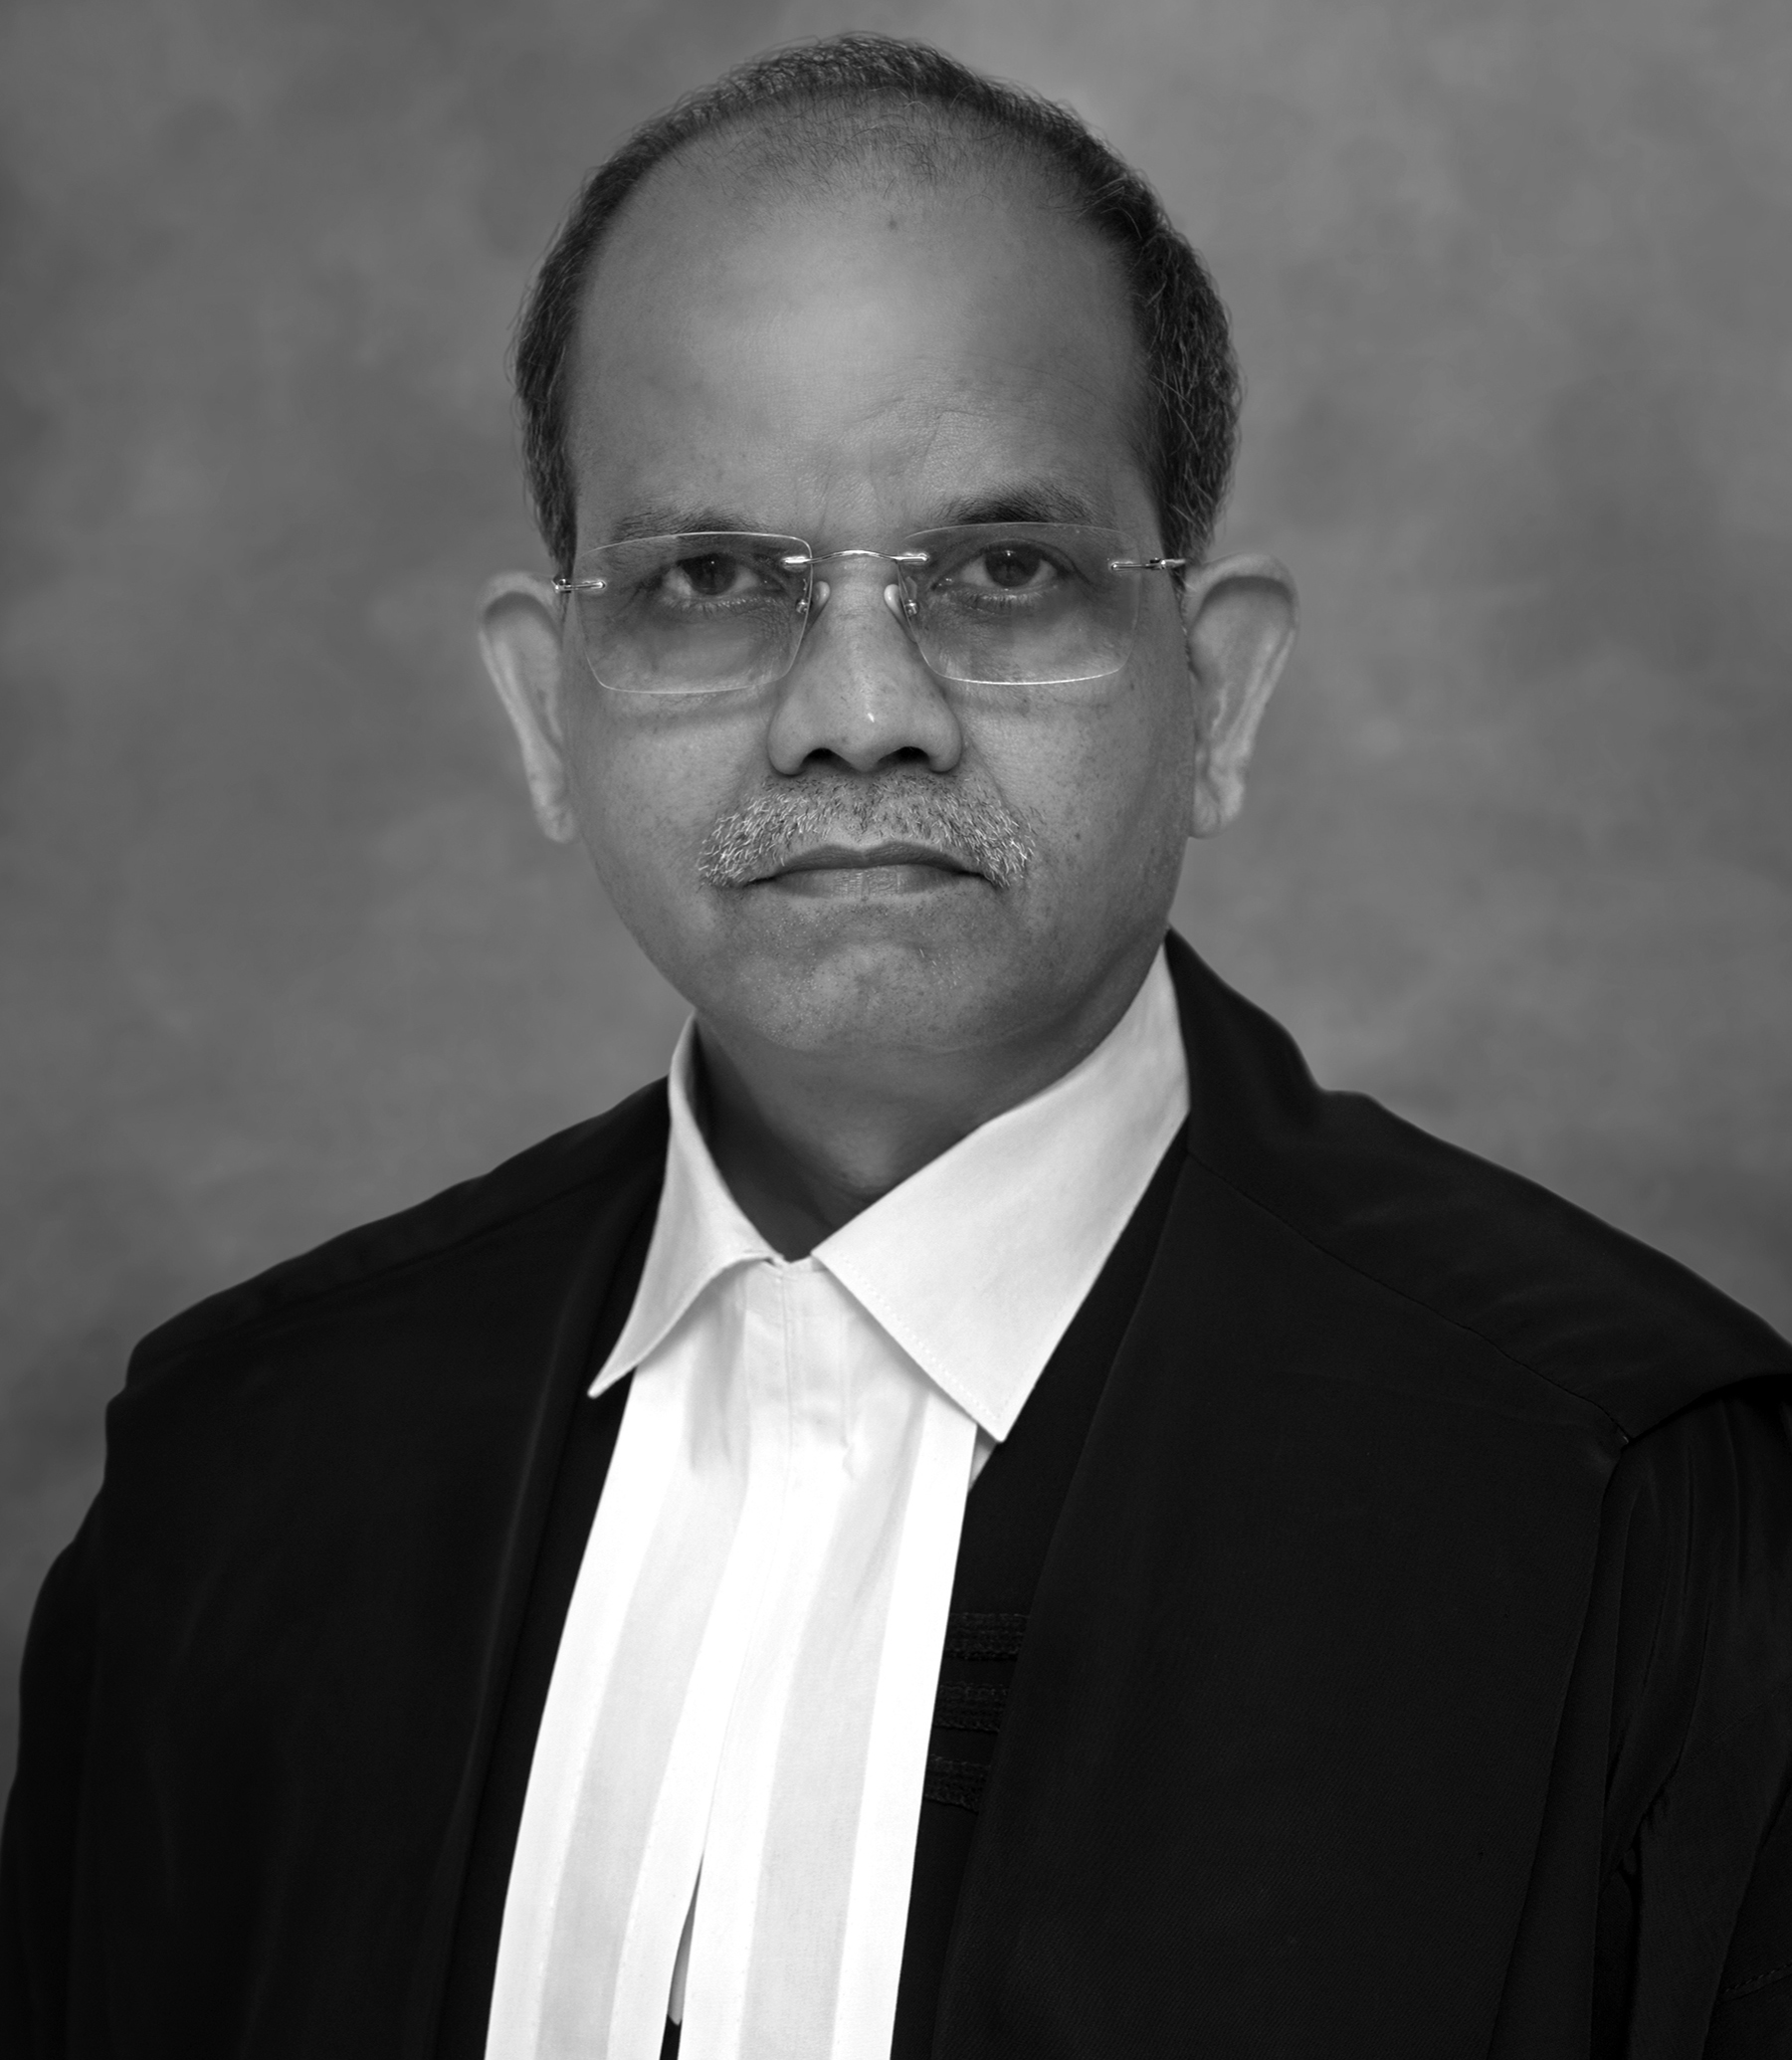 Administrative Judge